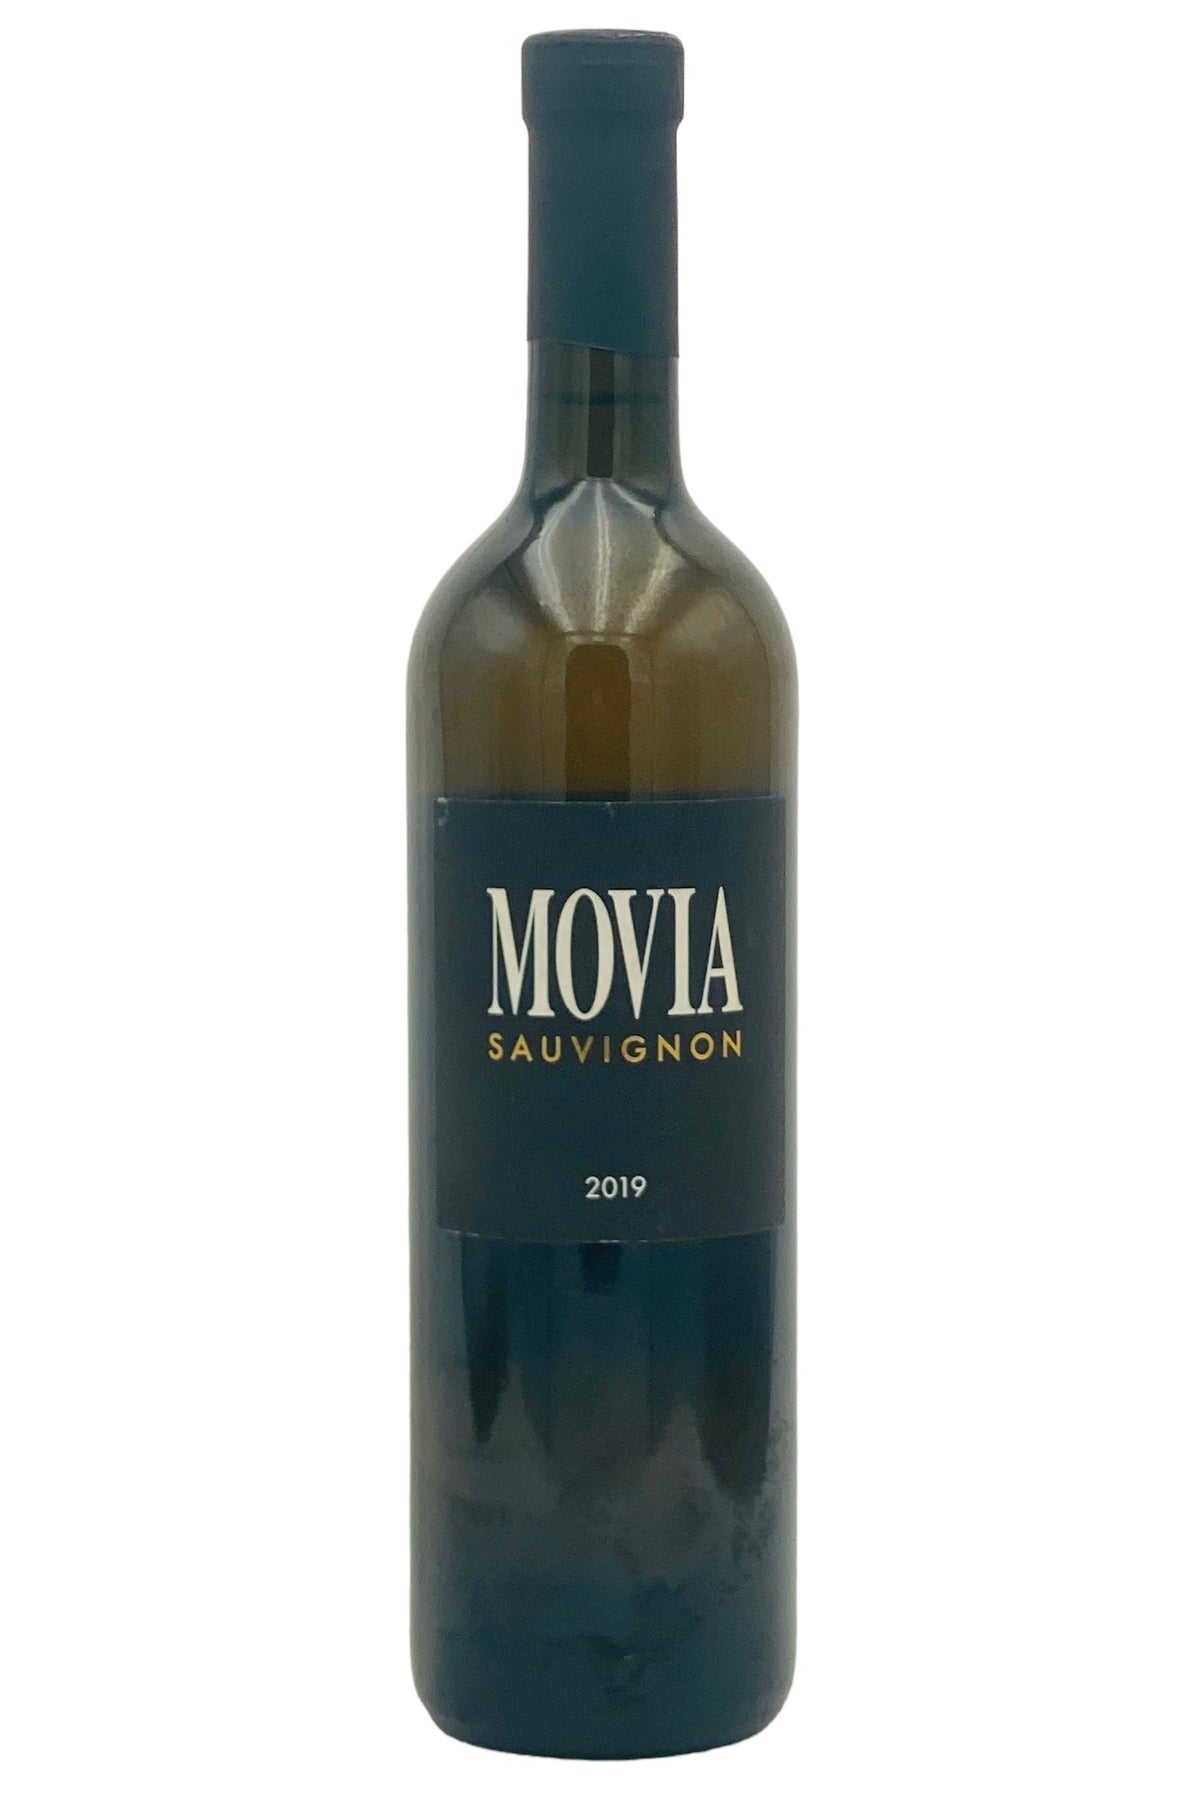 Movia 2019 Sauvignon Blanc Brda Slovenia